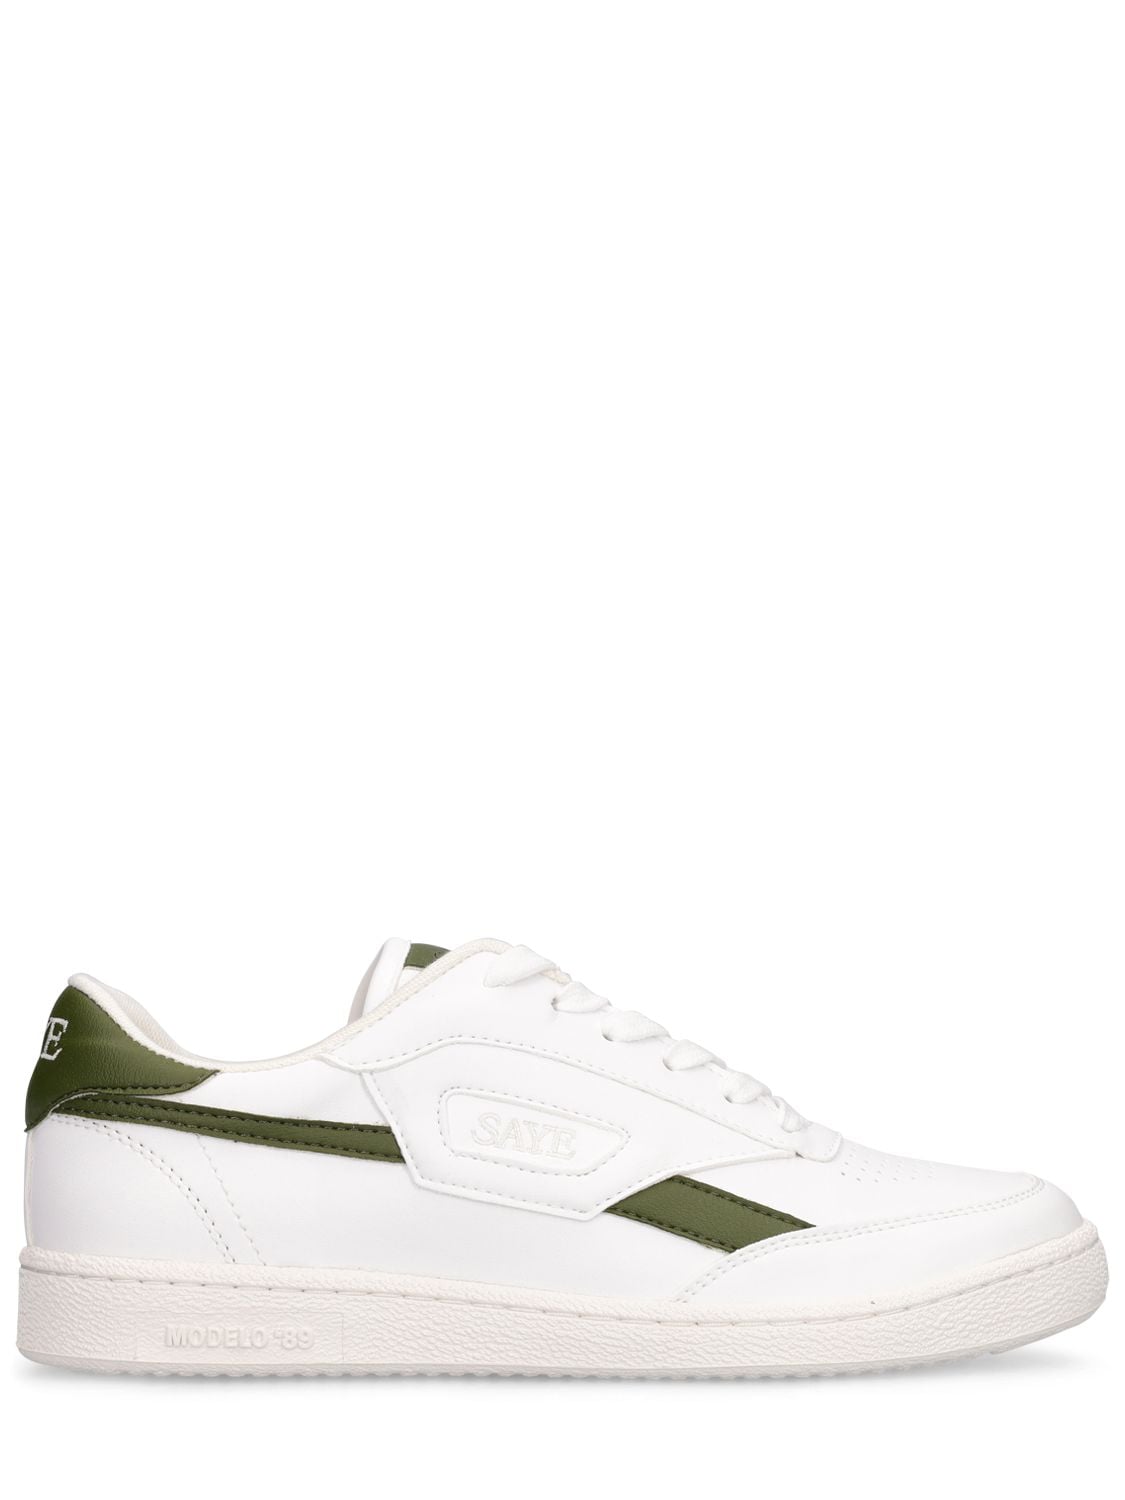 Saye Modelo '89 Vegan Cactus Sneakers In White At Urban Outfitters